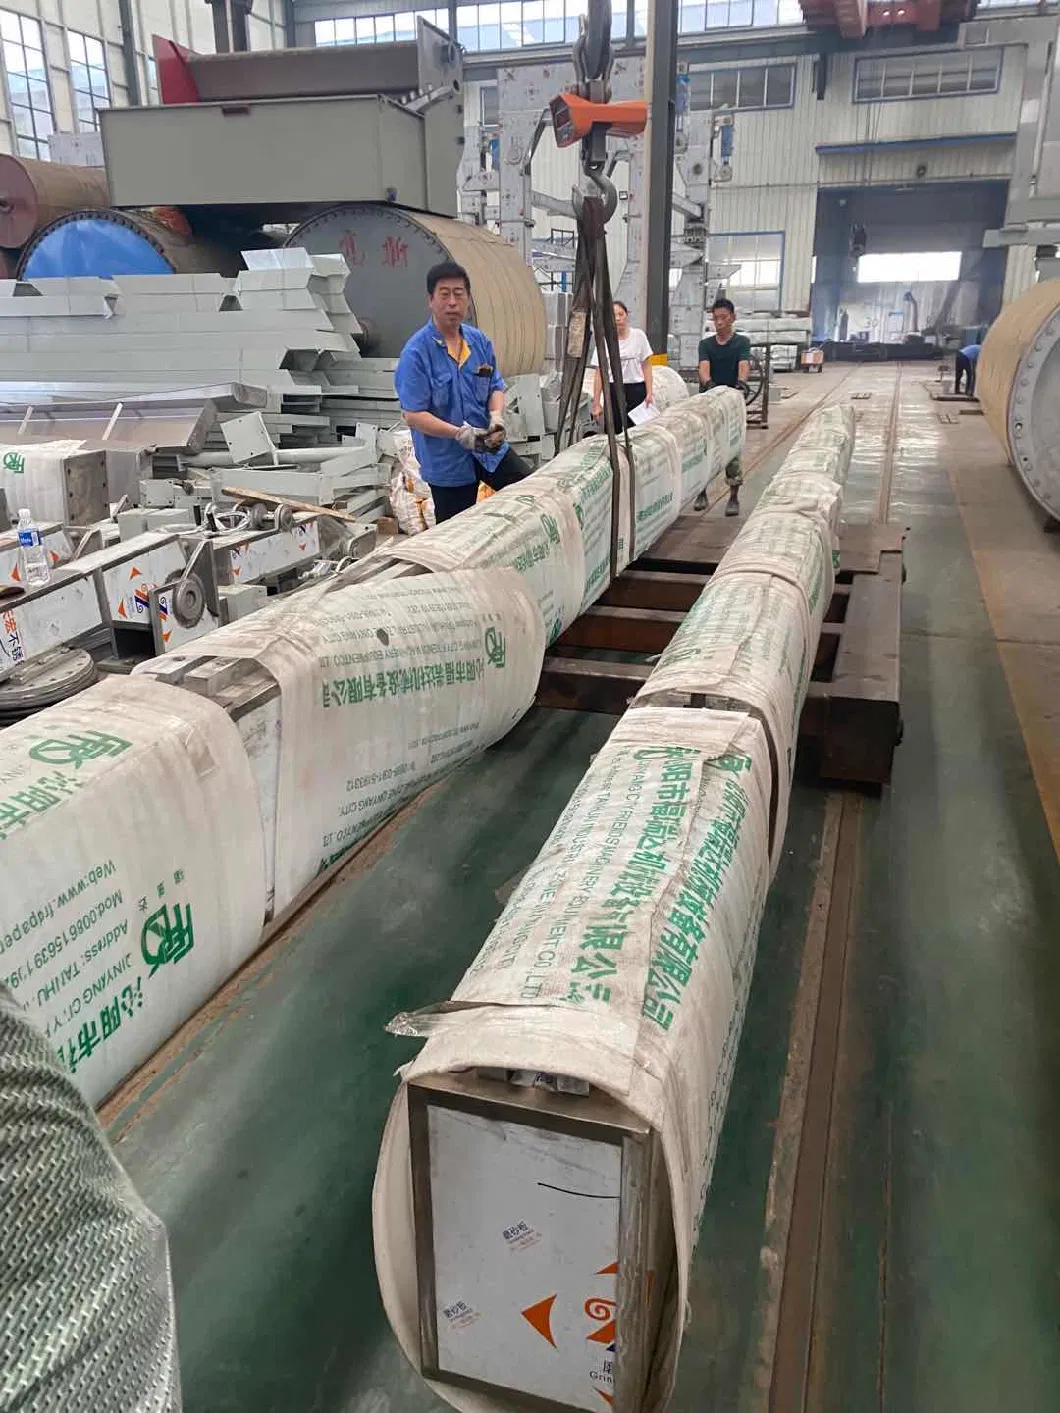 4200mm High Quality Corrugated Paper Kraft Paper Testliner Paper Cardboard Paper Making Machine